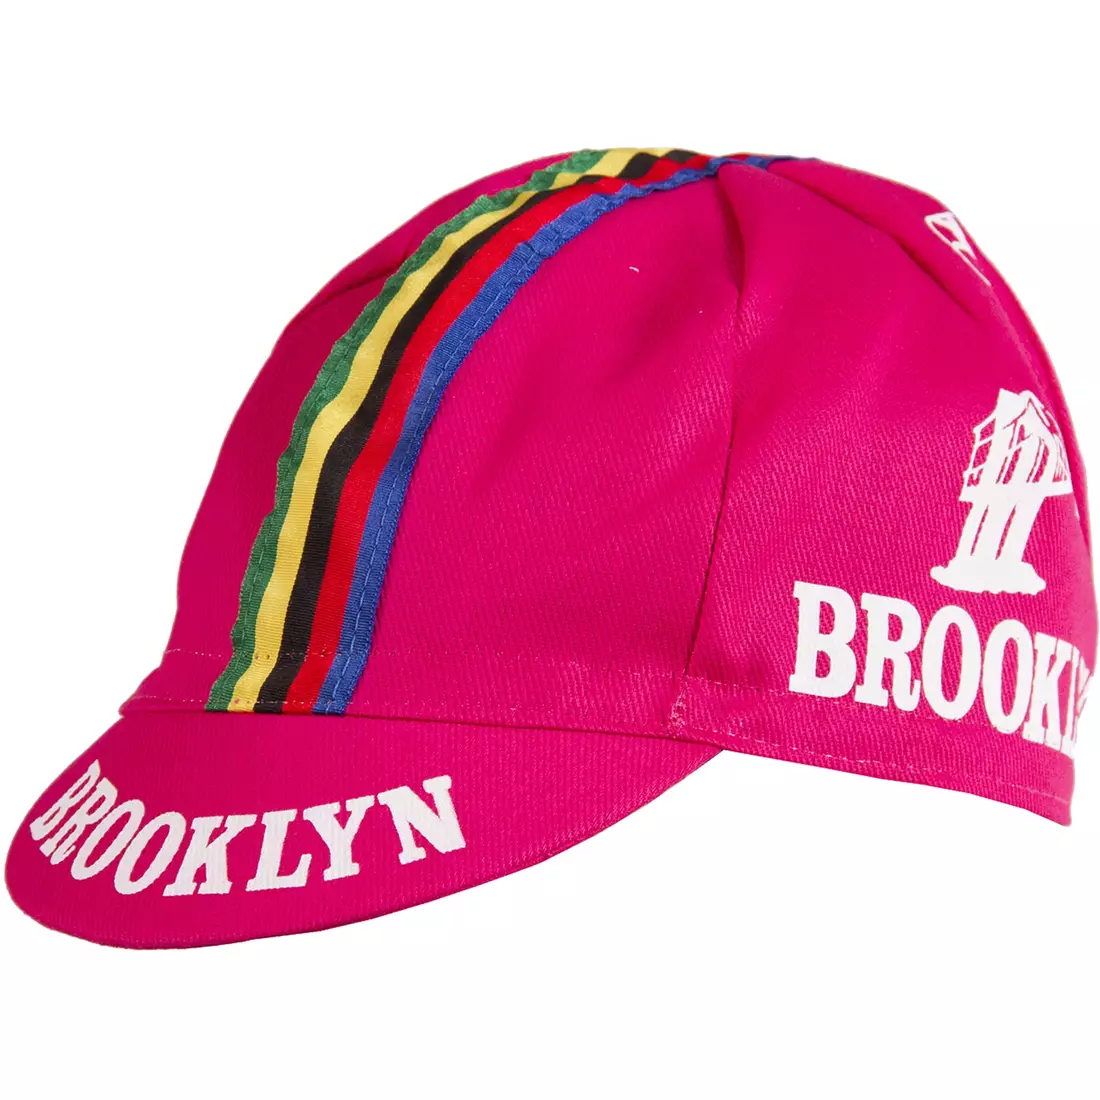 Cyklistická čepice GIORDANA SS18 - Brooklyn - Růžová s páskou GI-S6-COCA-BROK-PINK jedna velikost